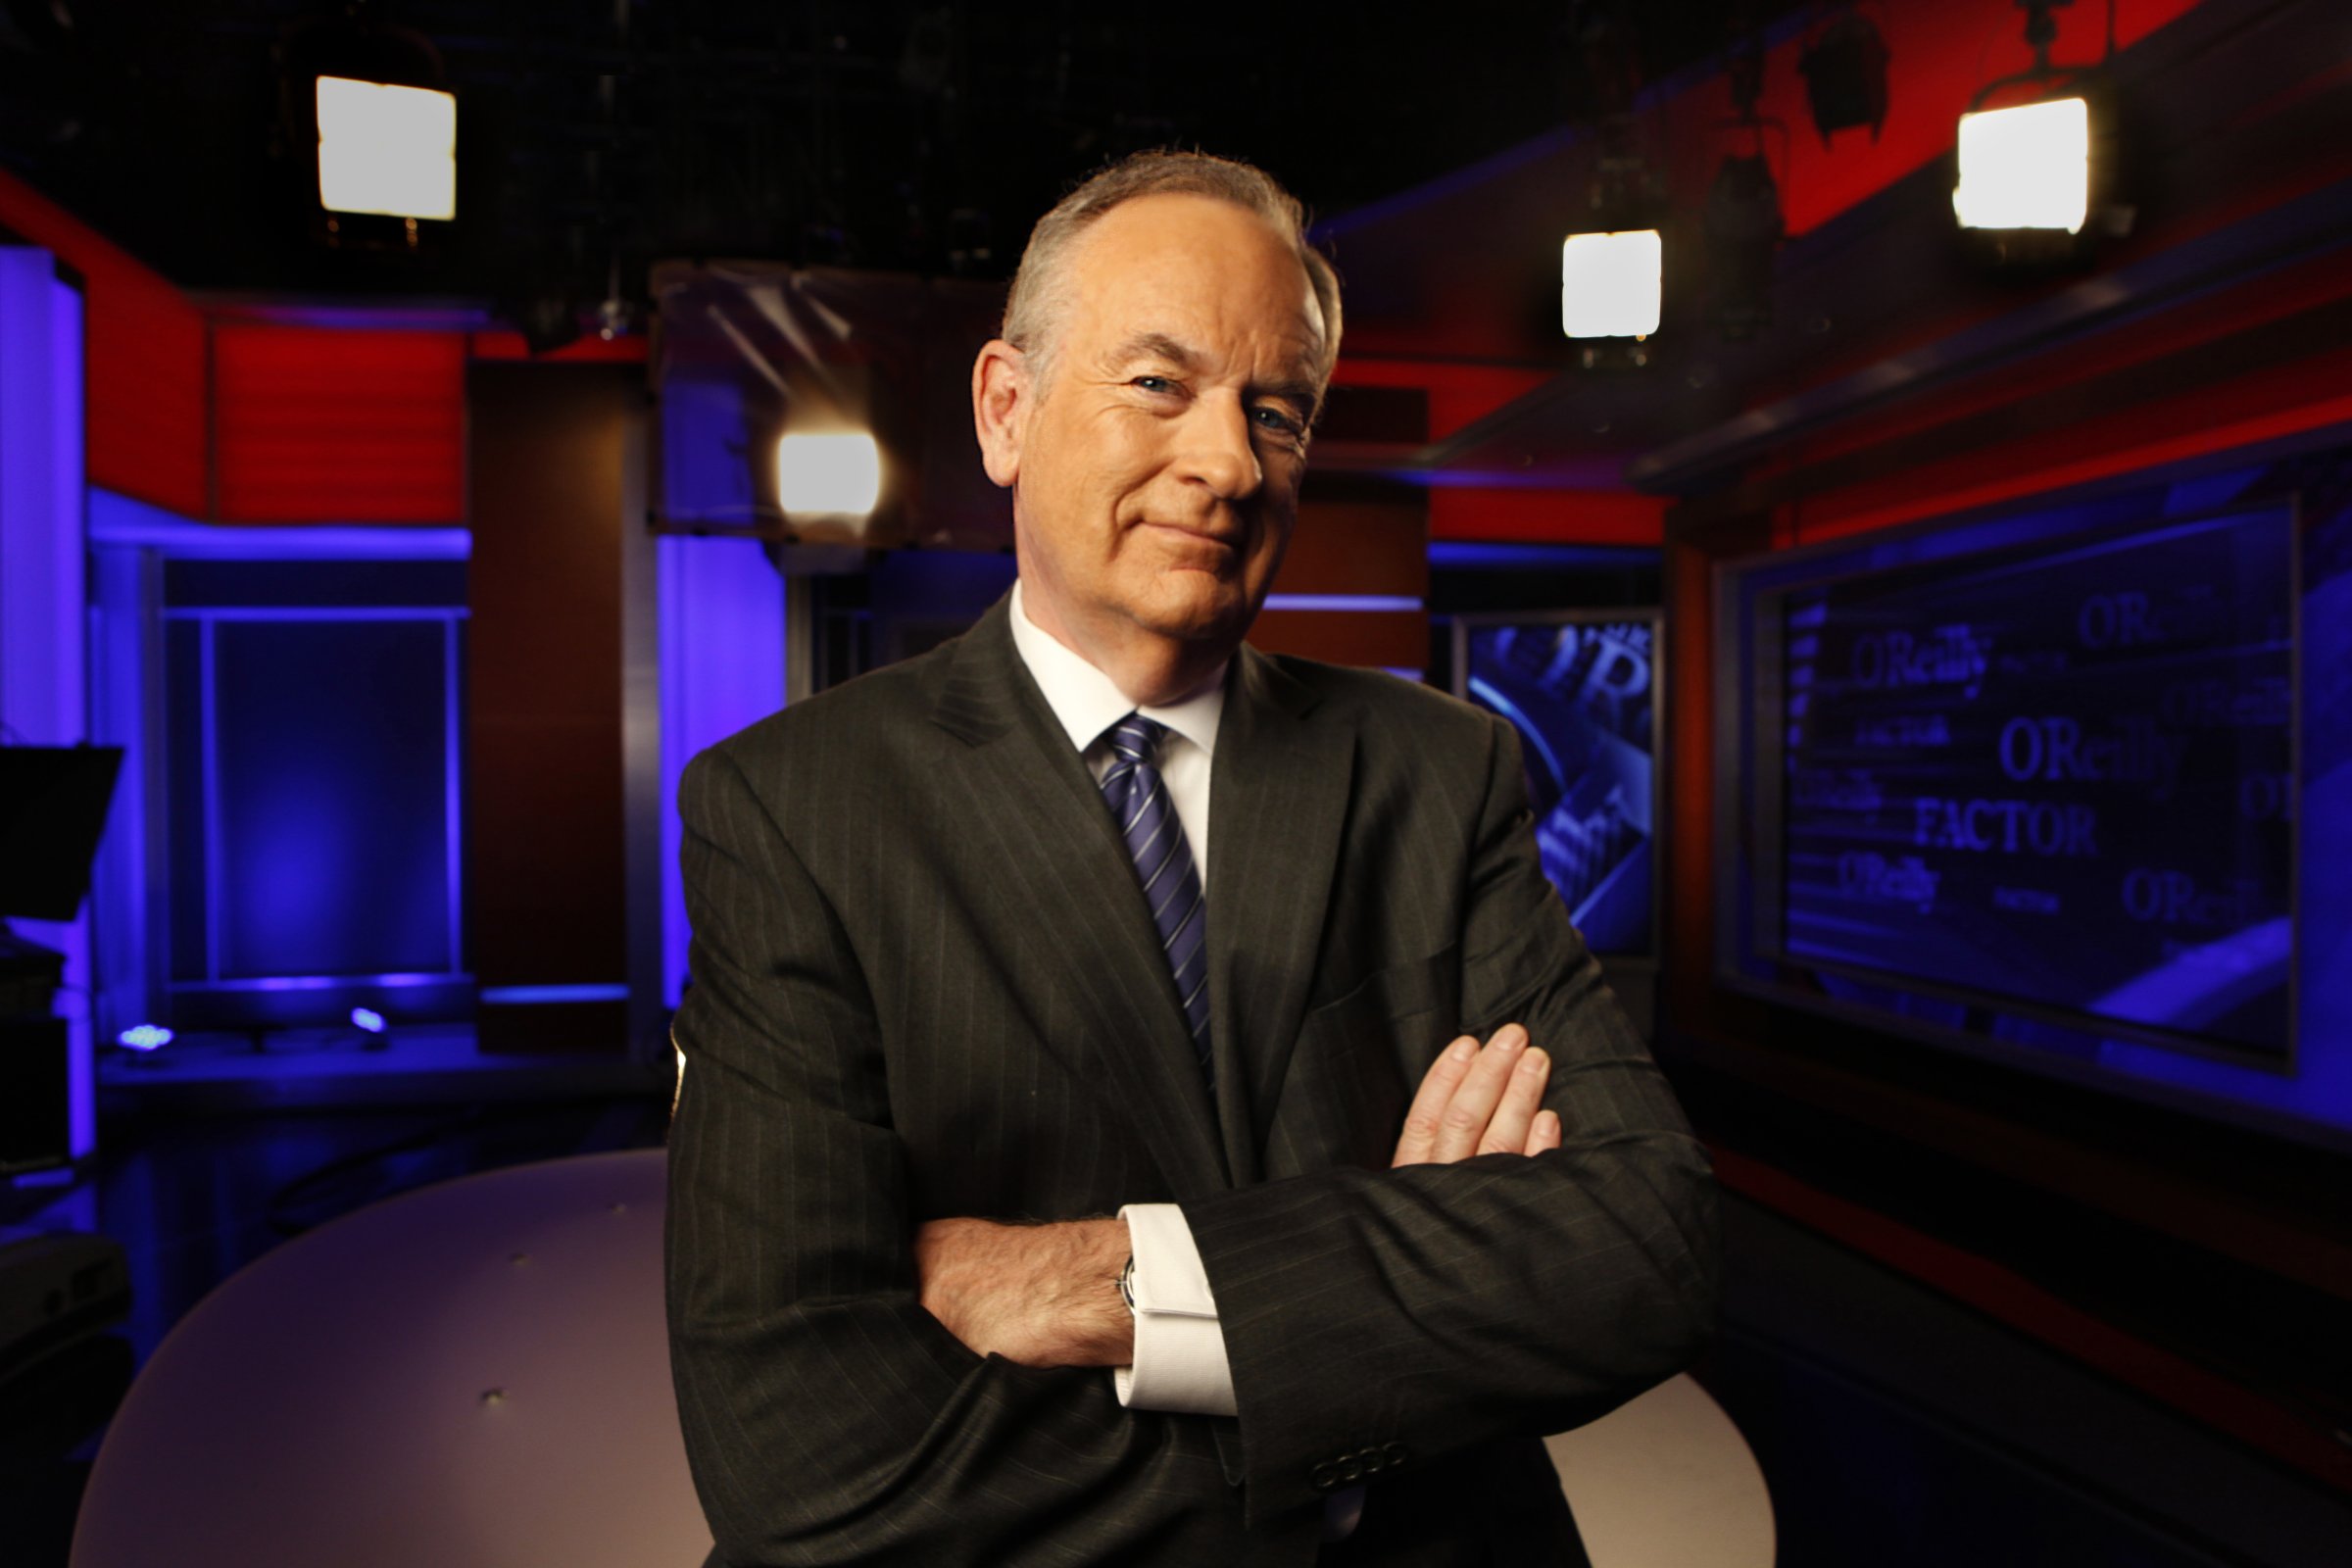 NEW YORK, NEW YORK, MARCH 15, 2010Fox News' top rated host, Bill O'Reilly has helped to make Fox